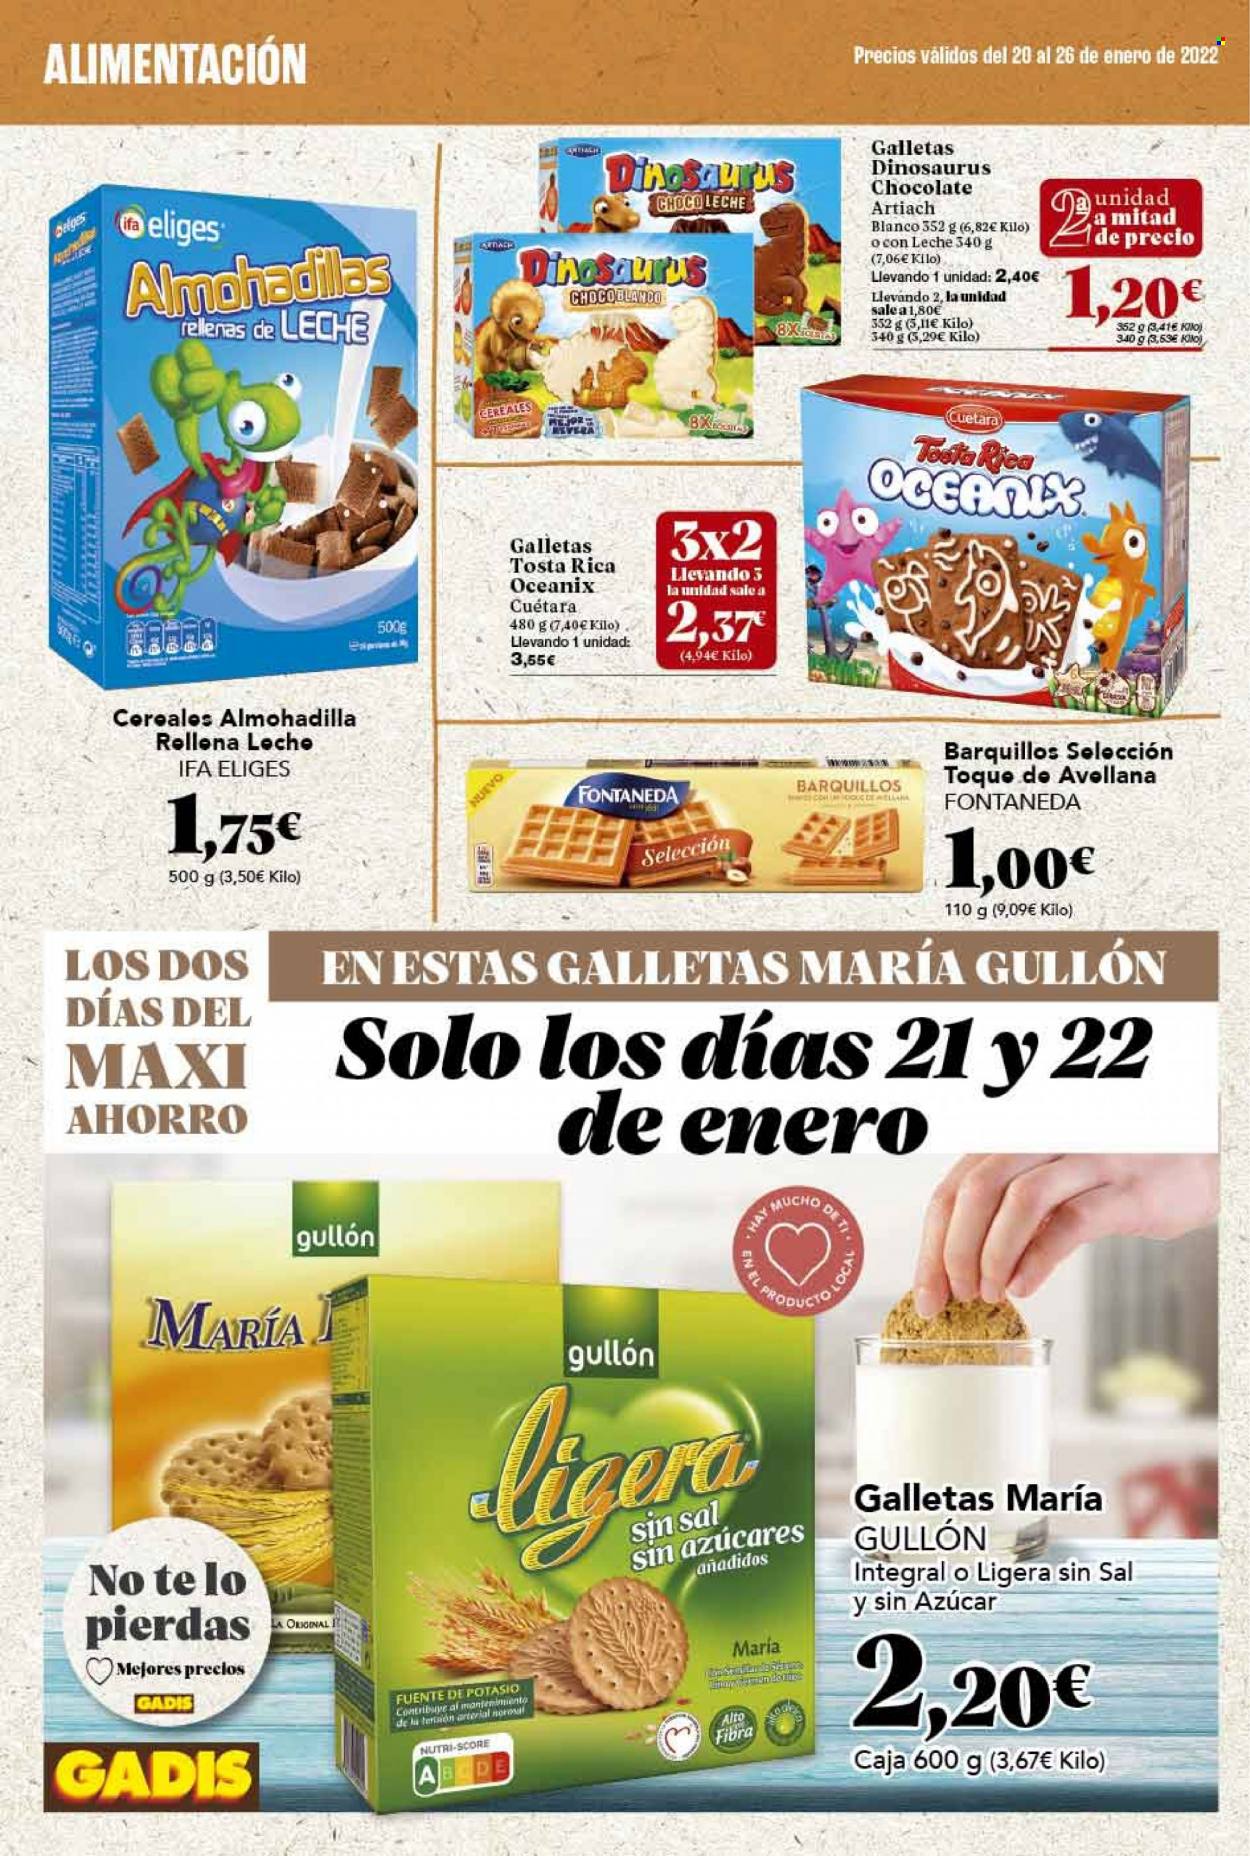 thumbnail - Folleto actual Gadis - 20/01/22 - 26/01/22 - Ventas - barquillos, Gullón, galletas, cereales. Página 22.